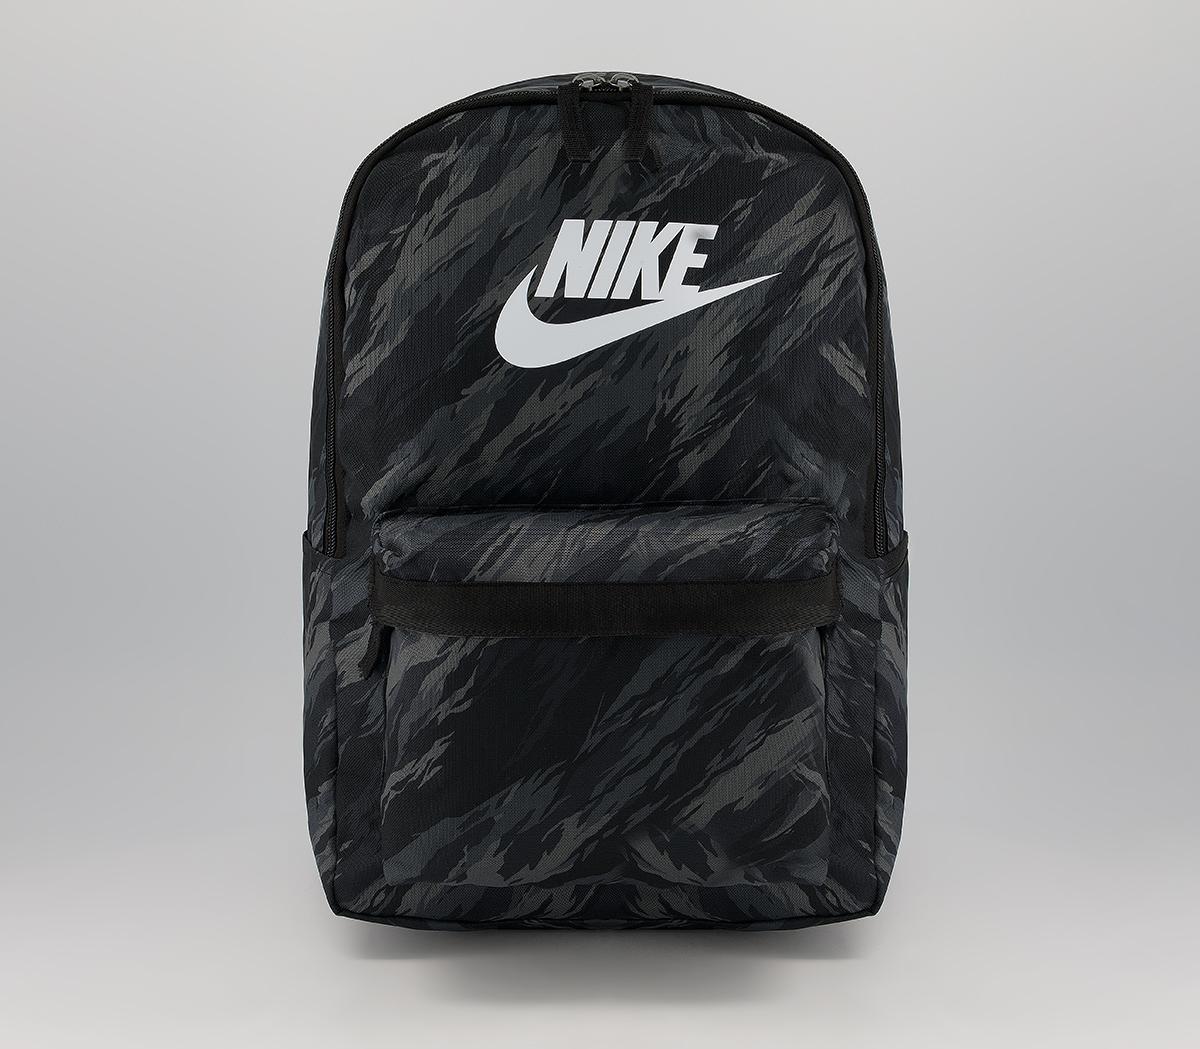 NikeHeritage BackpackCamo Black White